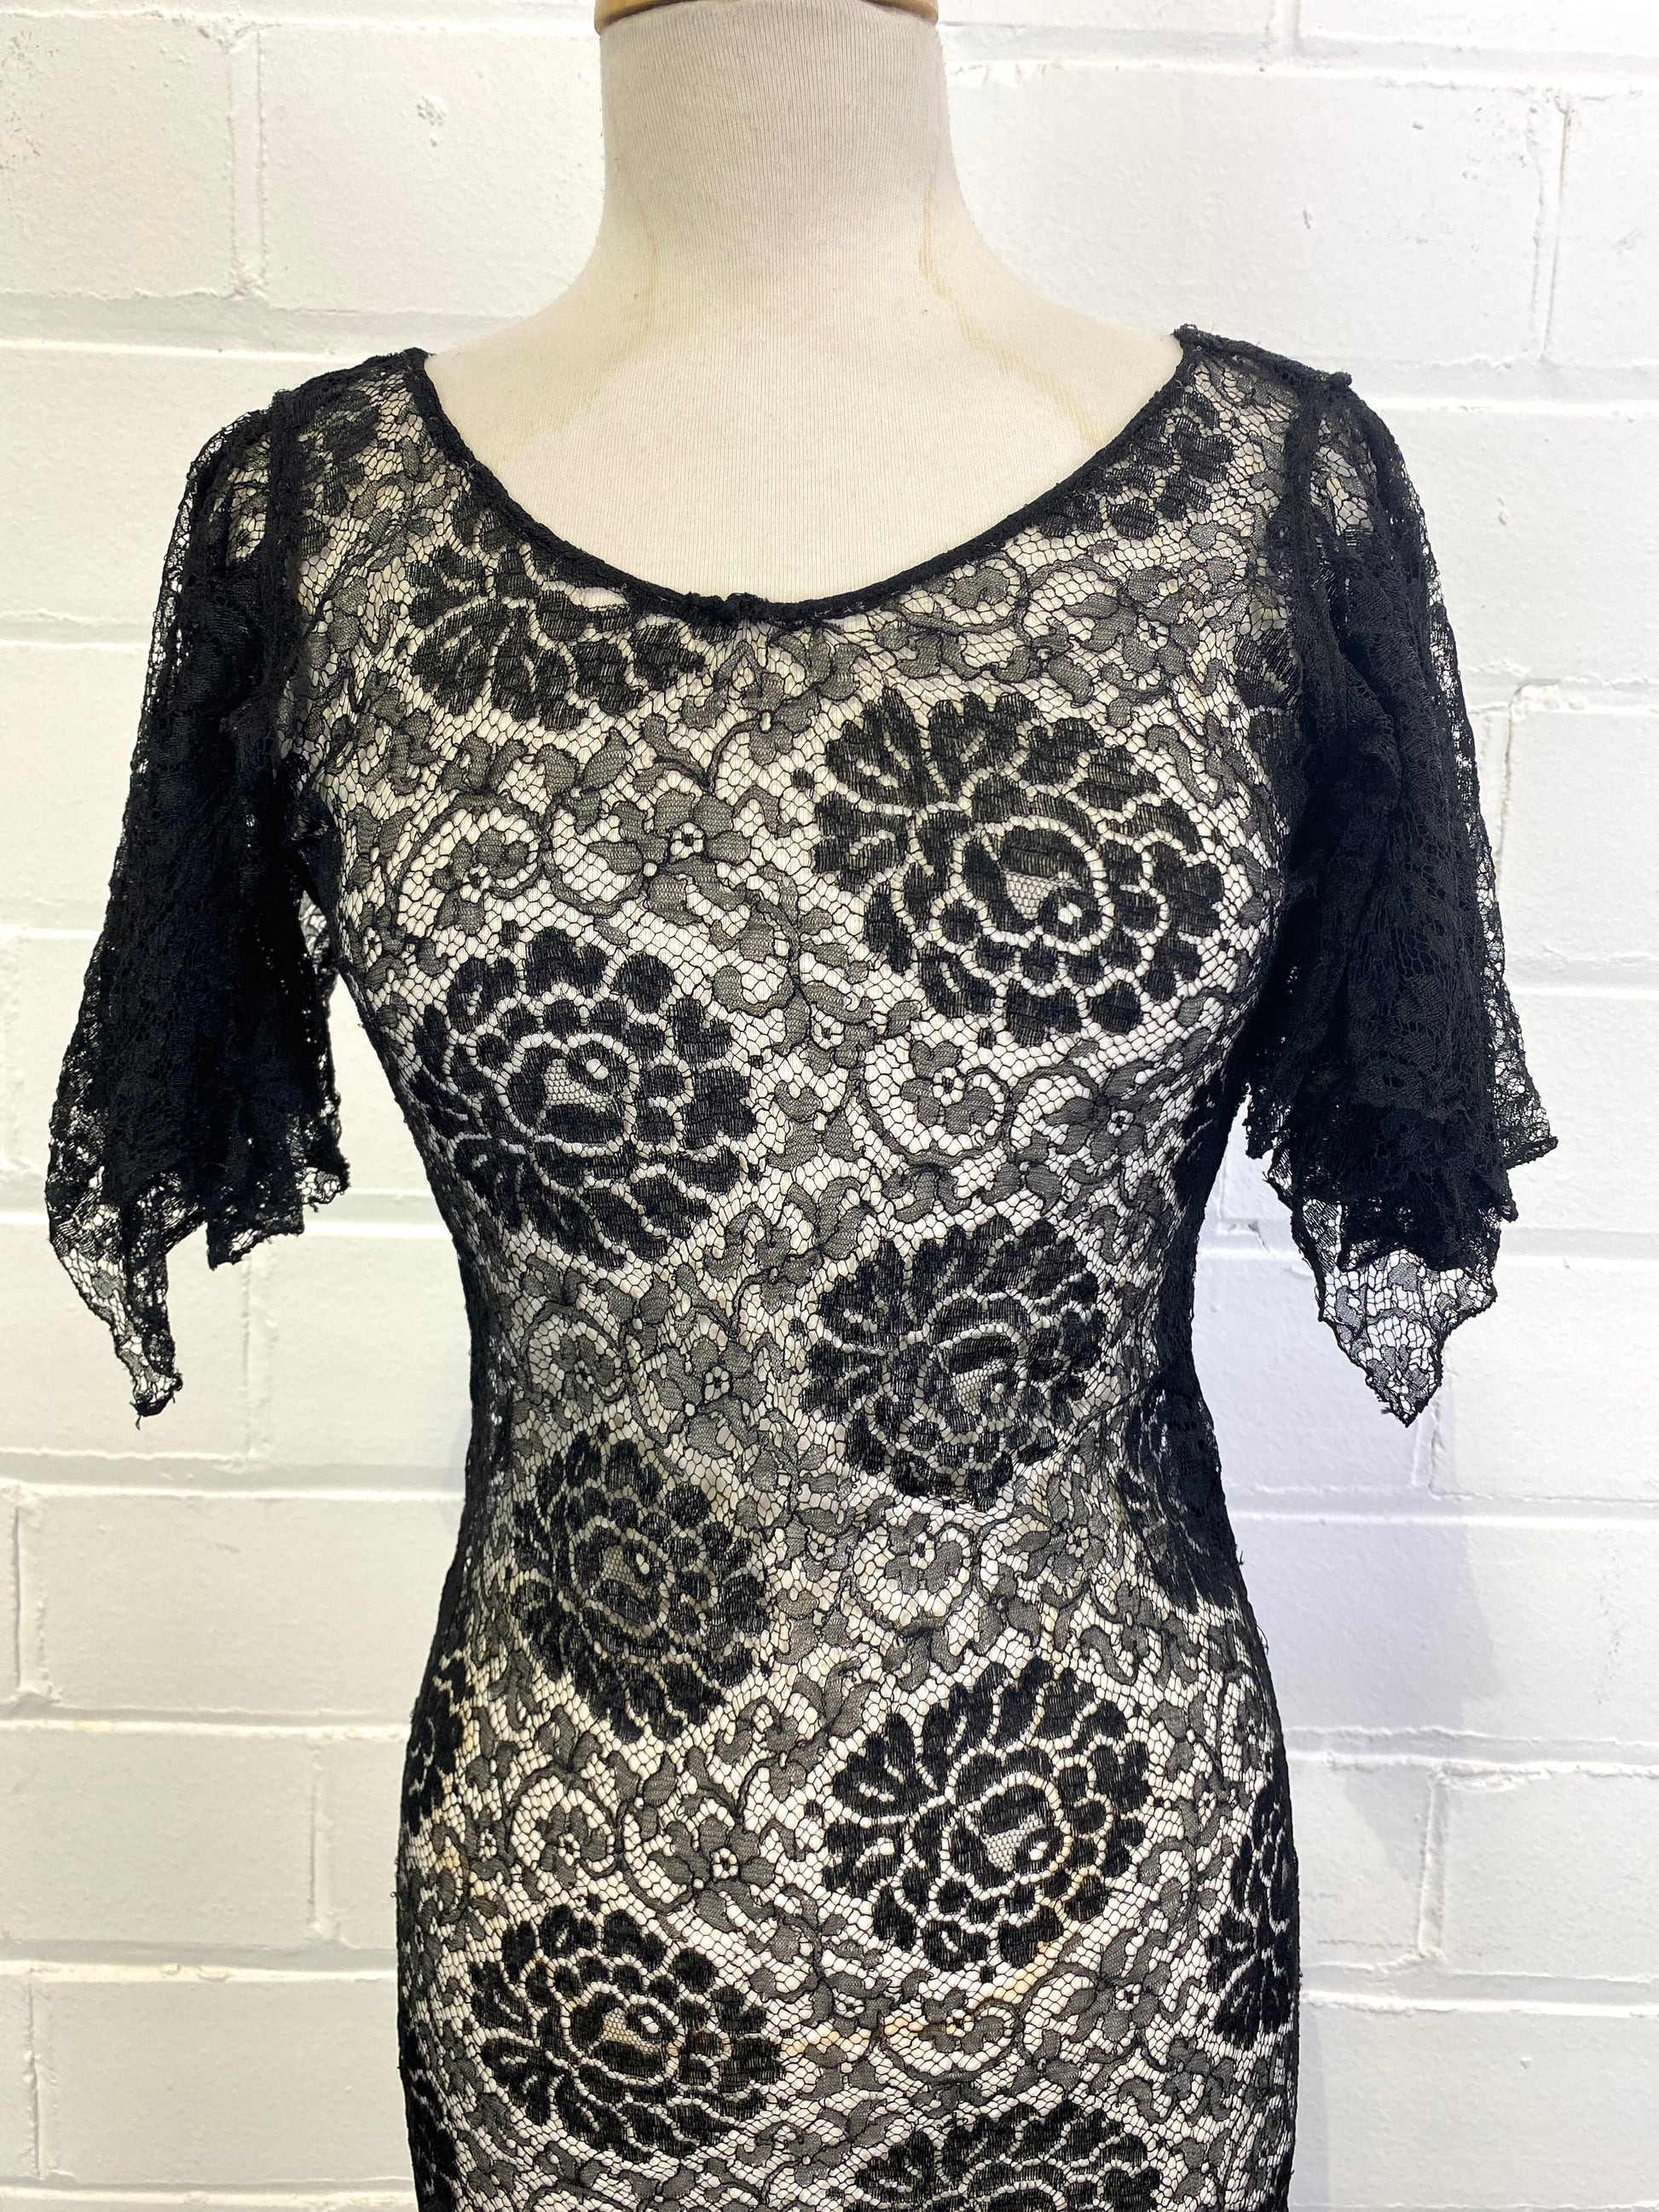 Vintage 1930s Black Lace Dress, Small